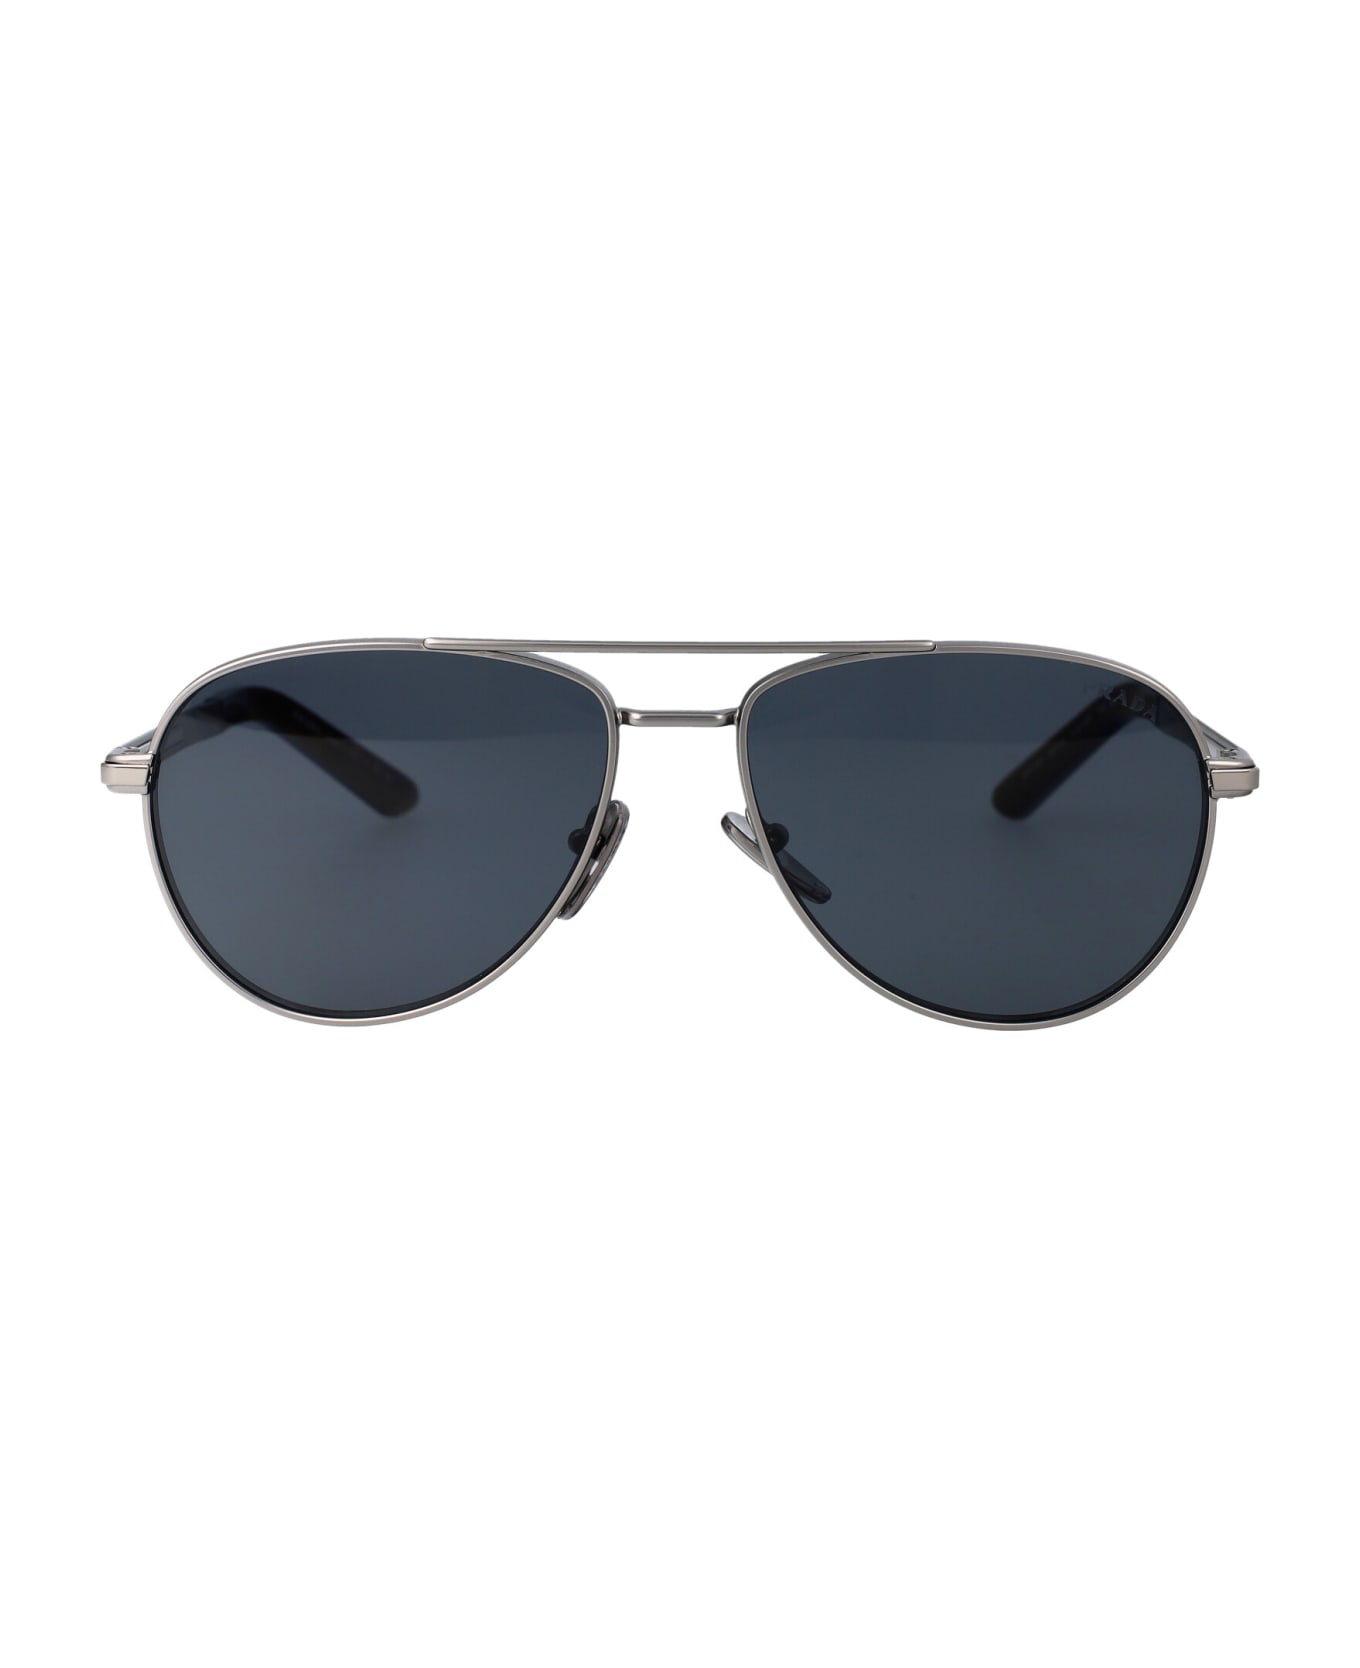 Prada Eyewear 0pr A54s Sunglasses - 7CQ09T Matte Gunmetal